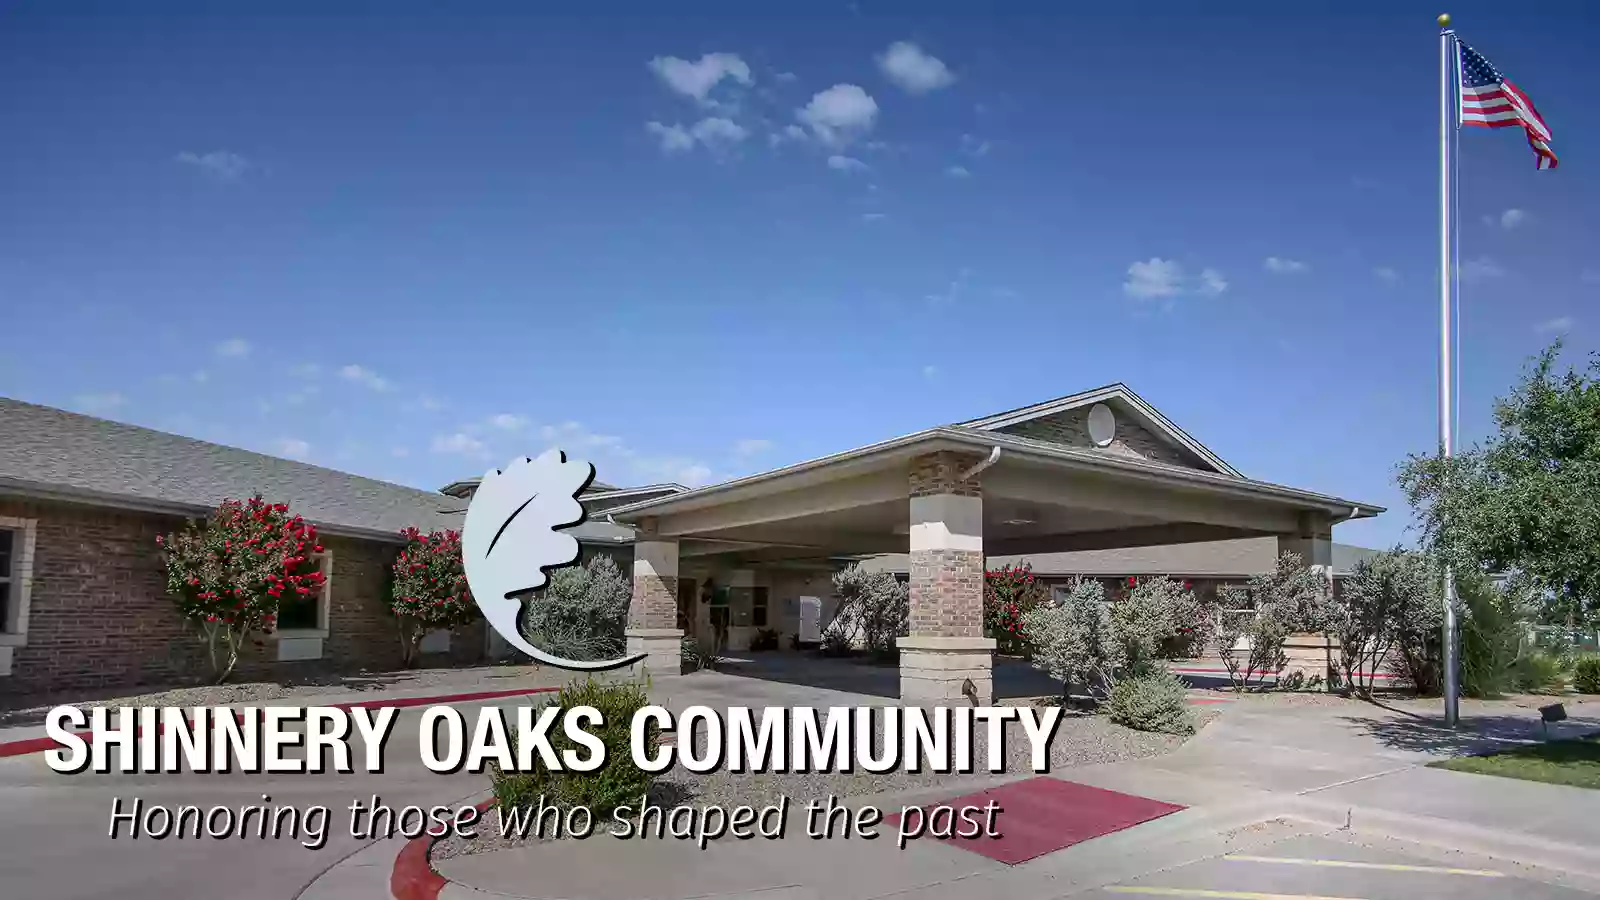 Shinnery Oaks Community